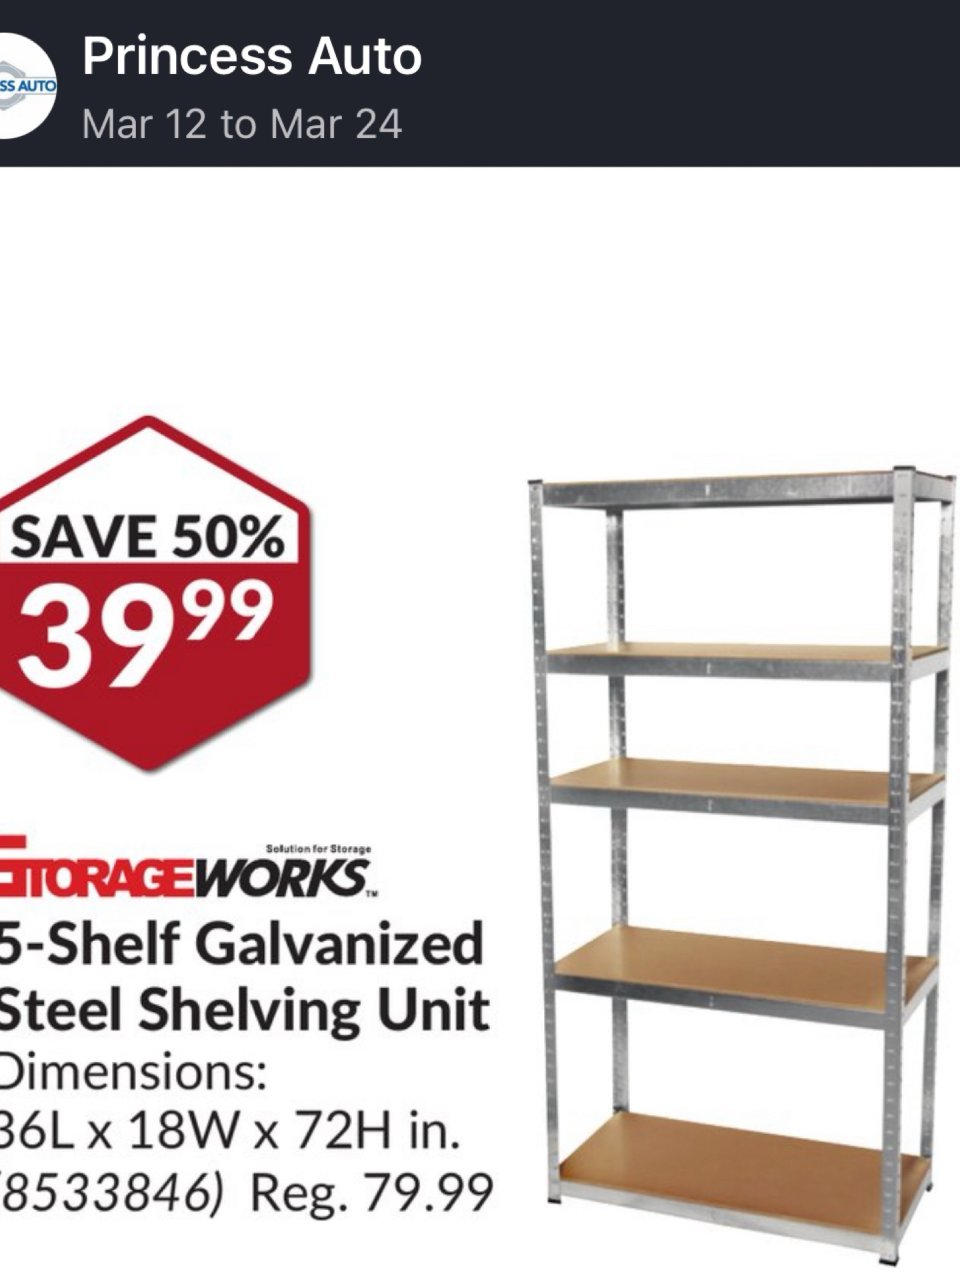 5-Shelf Galvanized Steel Shelving Unit